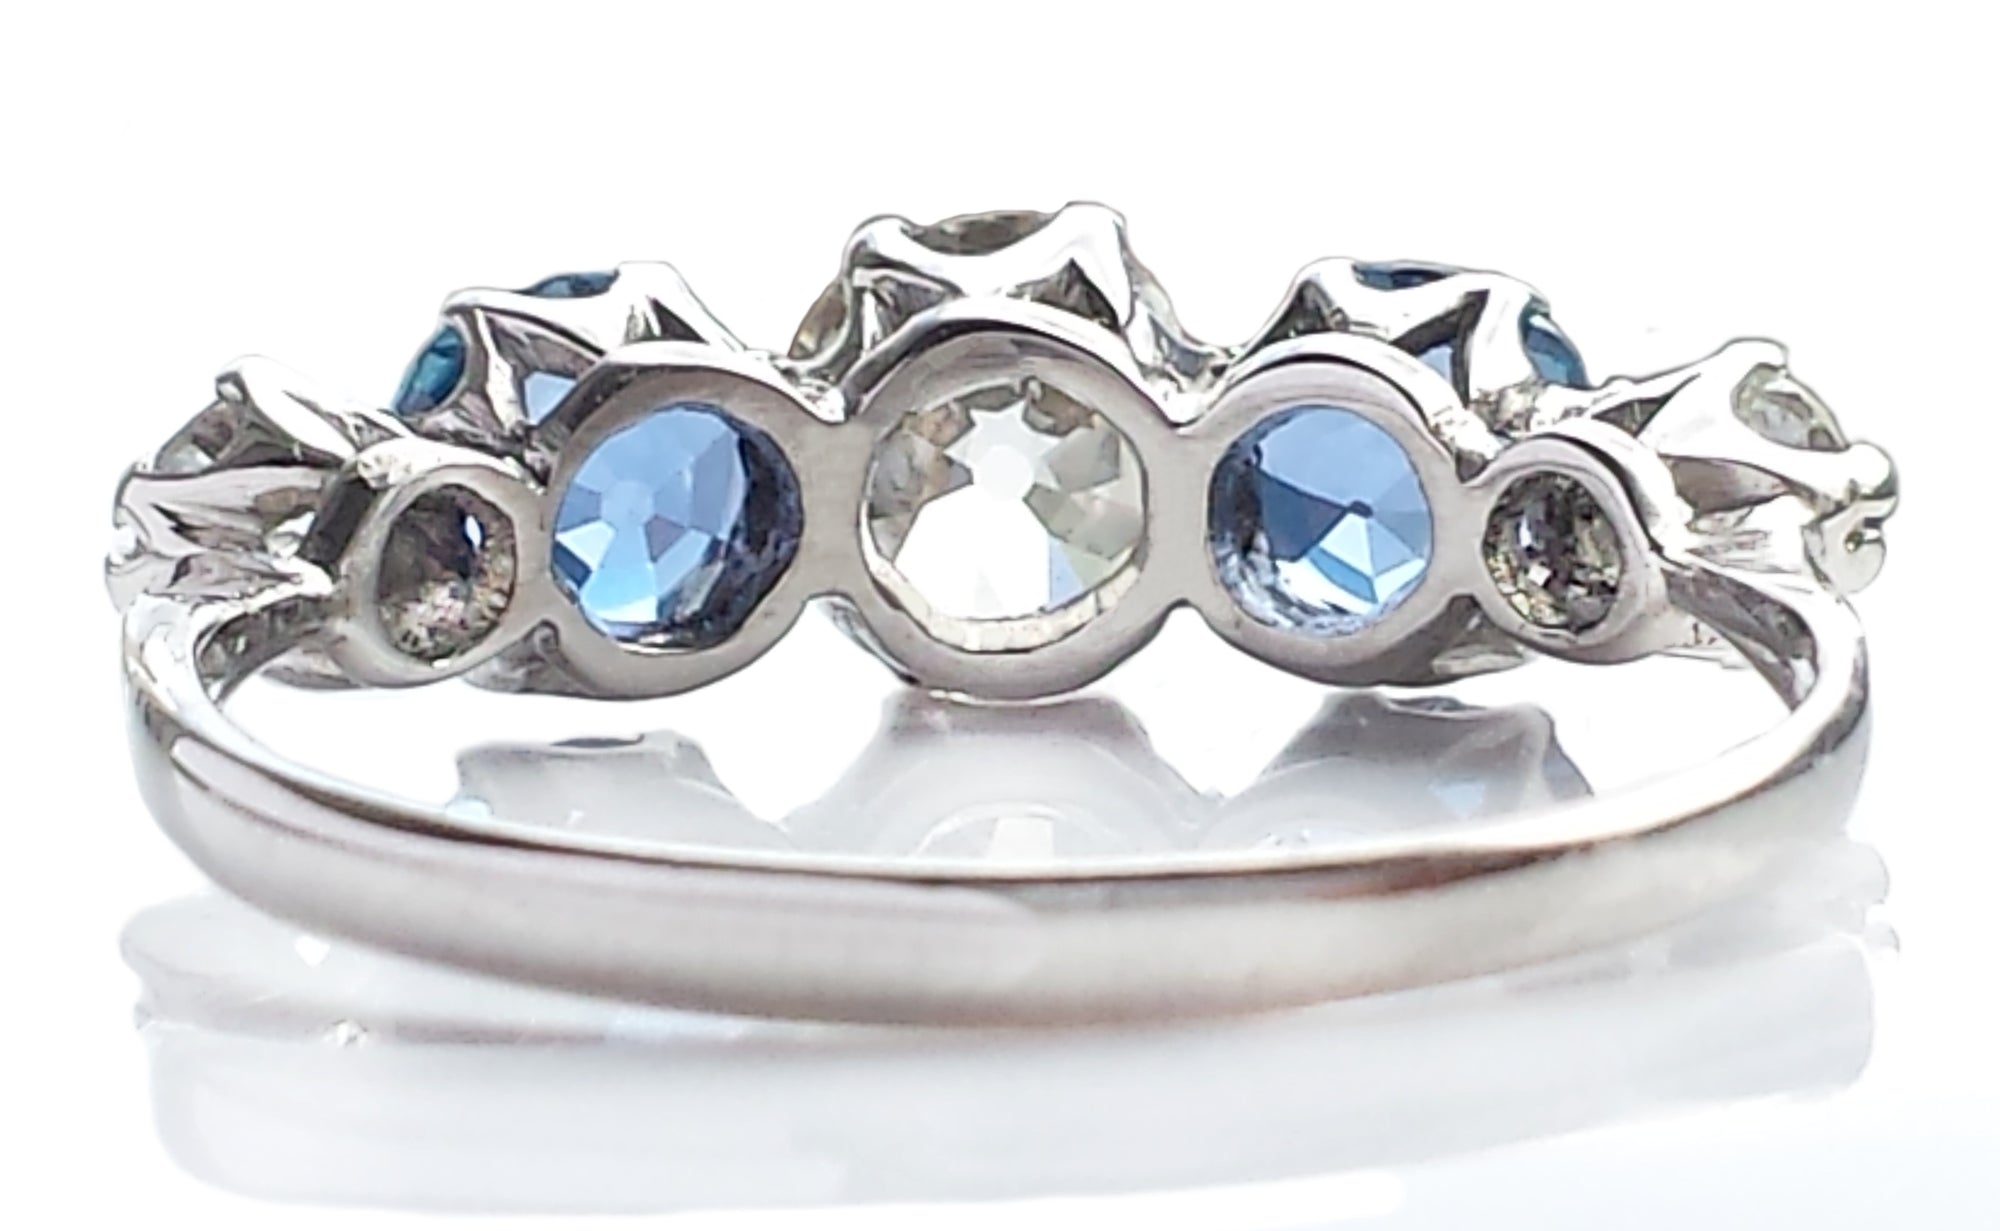 Art Deco 1920s 5-Stone Cornflower Sapphire & Old Cut Diamond Engagement Ring